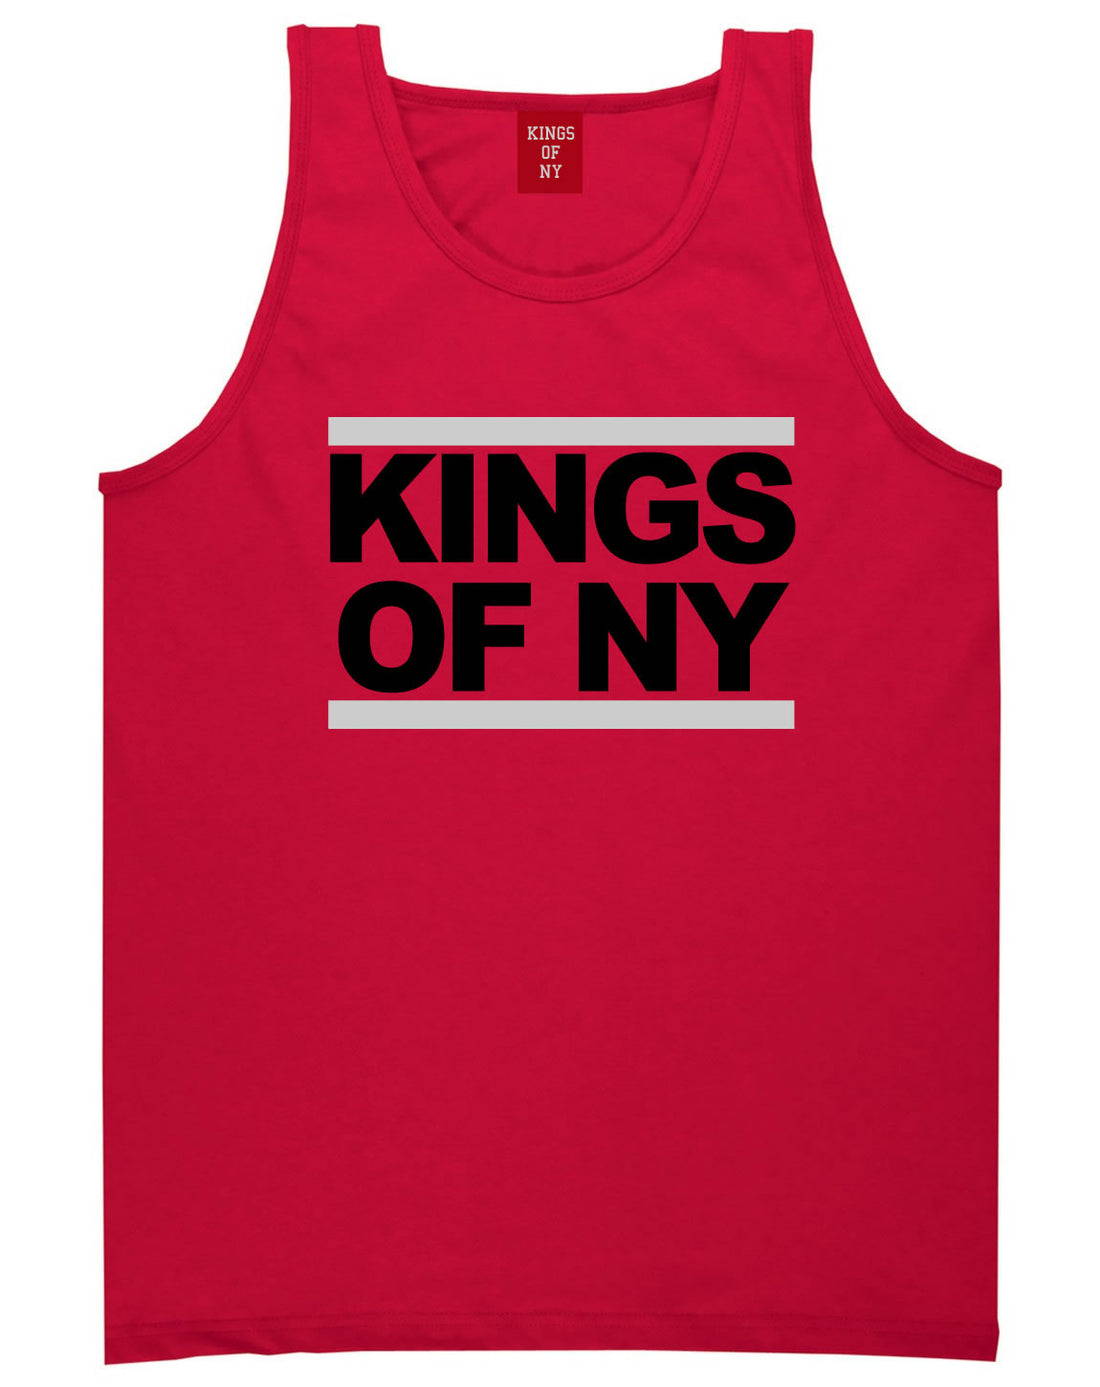 Kings Of NY Run DMC Logo Style Tank Top in Red By Kings Of NY